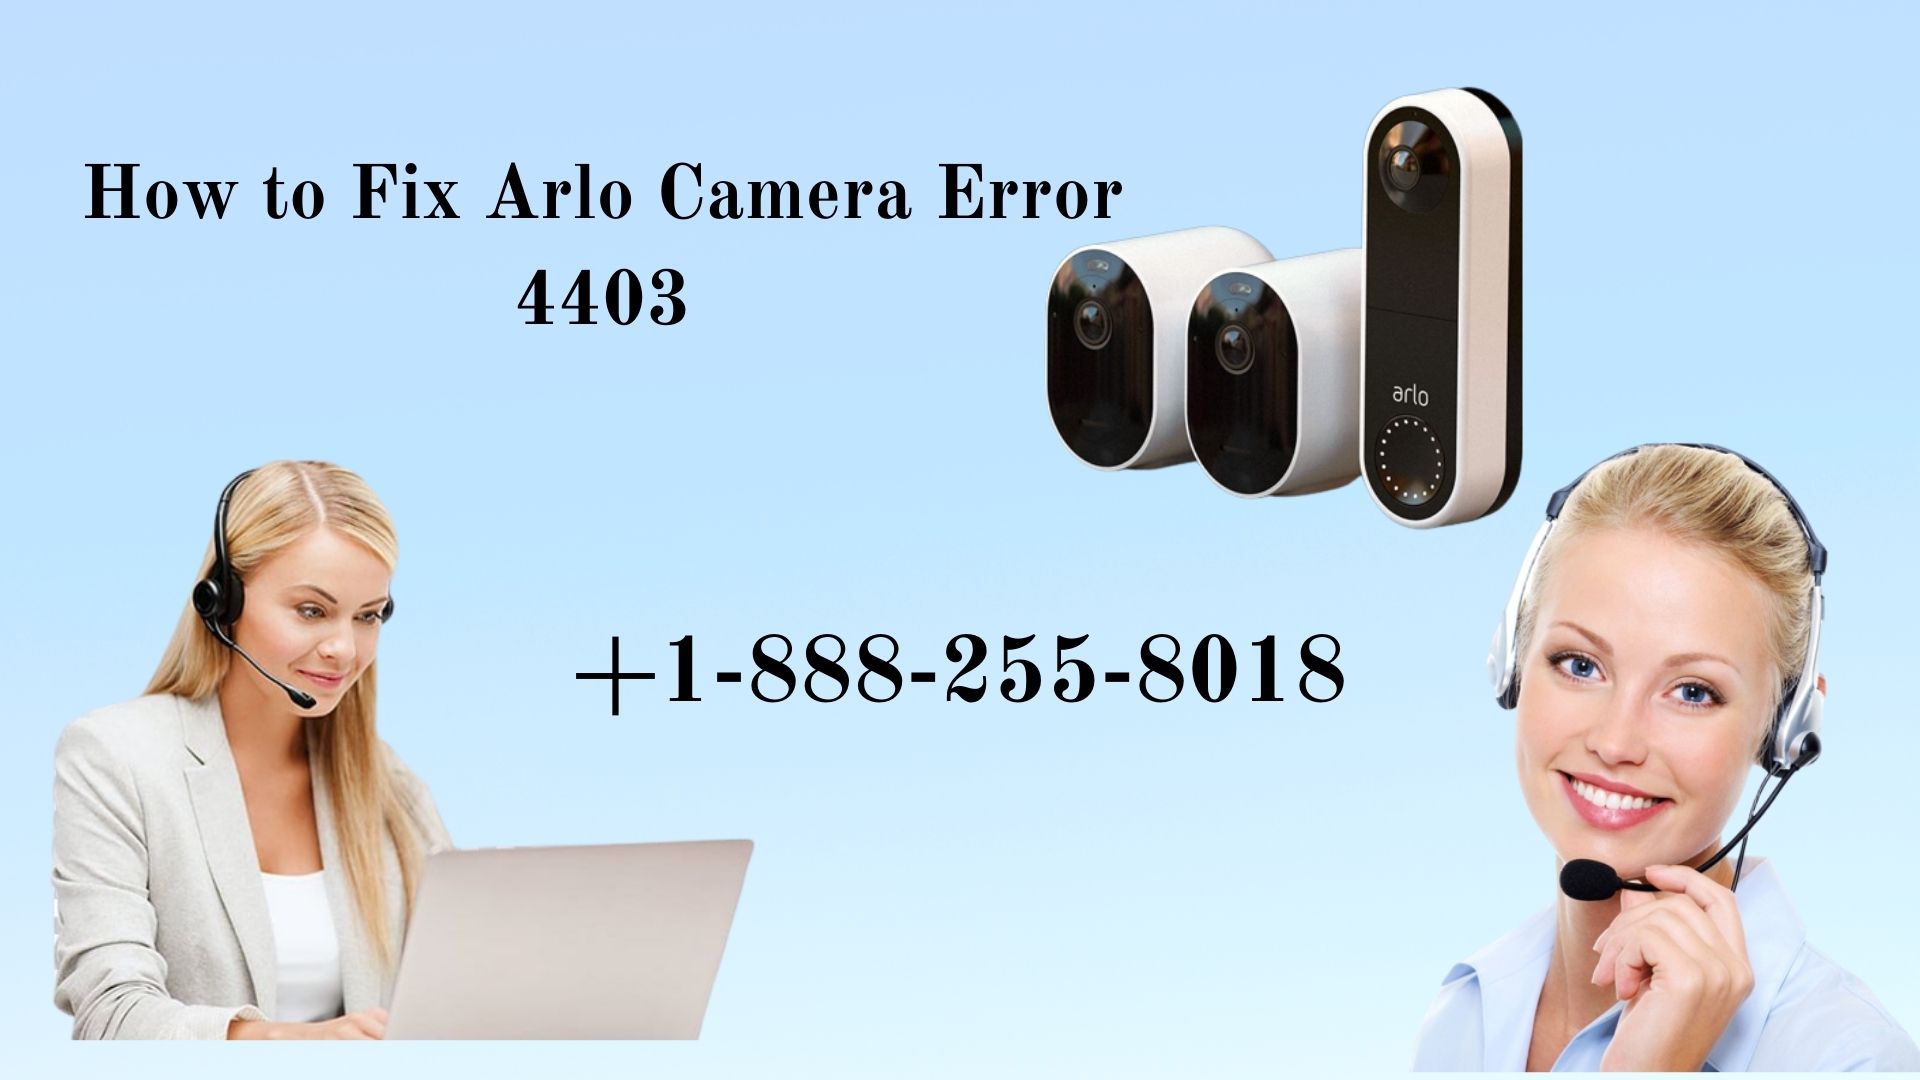 Arlo camera error 4403 | +1-888-255-8018 | Helpline Number